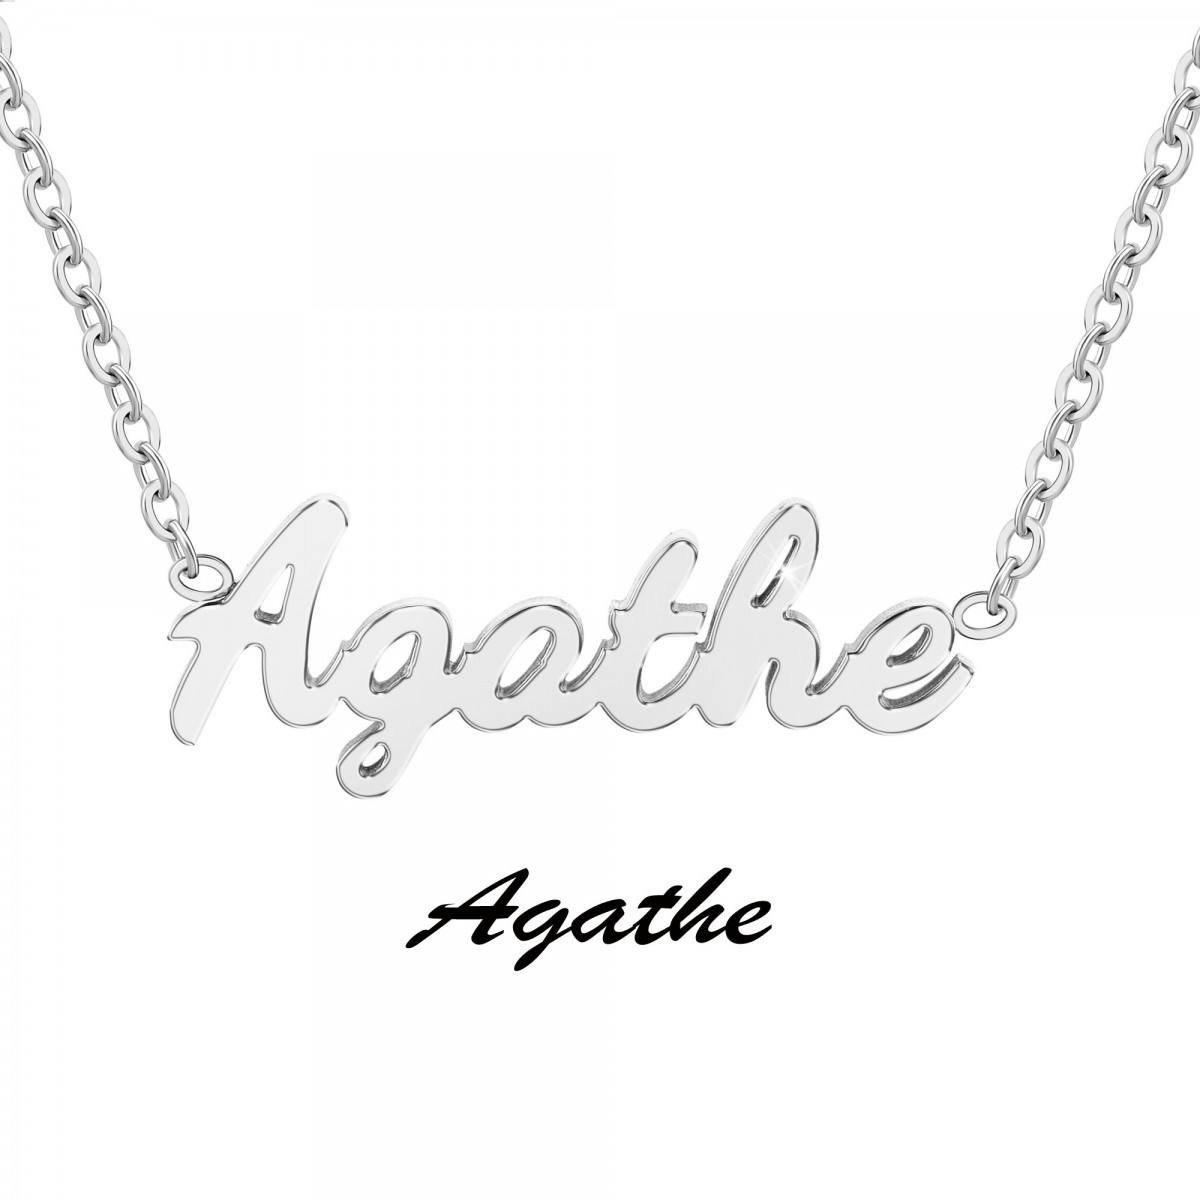 Agathe - Collier prénom - vue 3